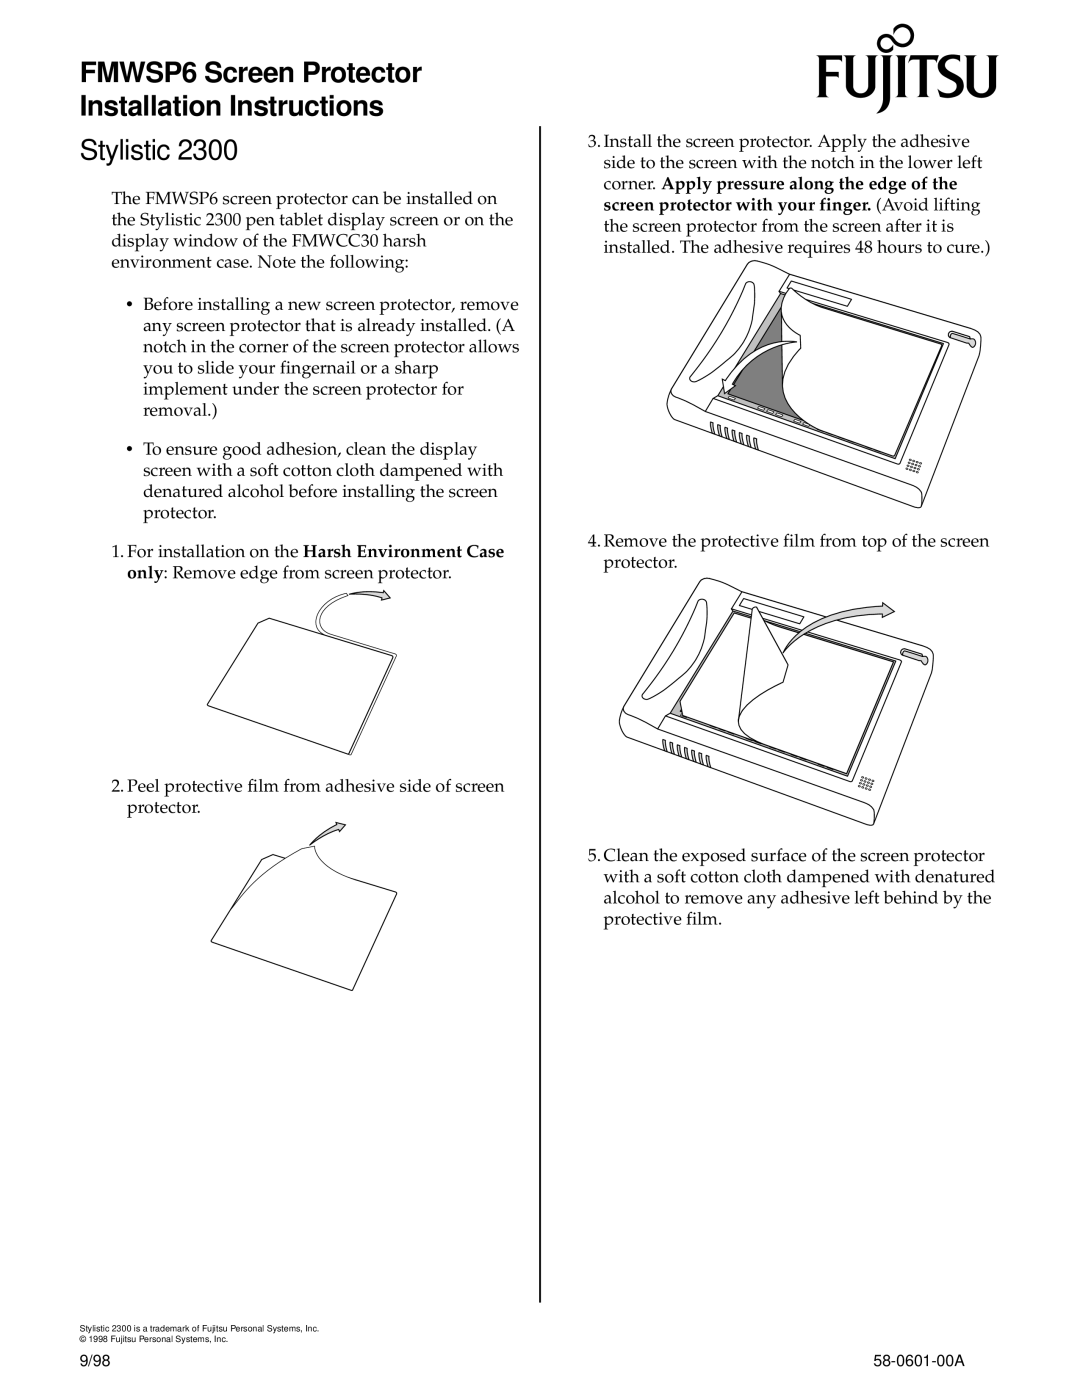 Fujitsu installation instructions Stylistic, FMWSP6 Screen Protector Installation Instructions 